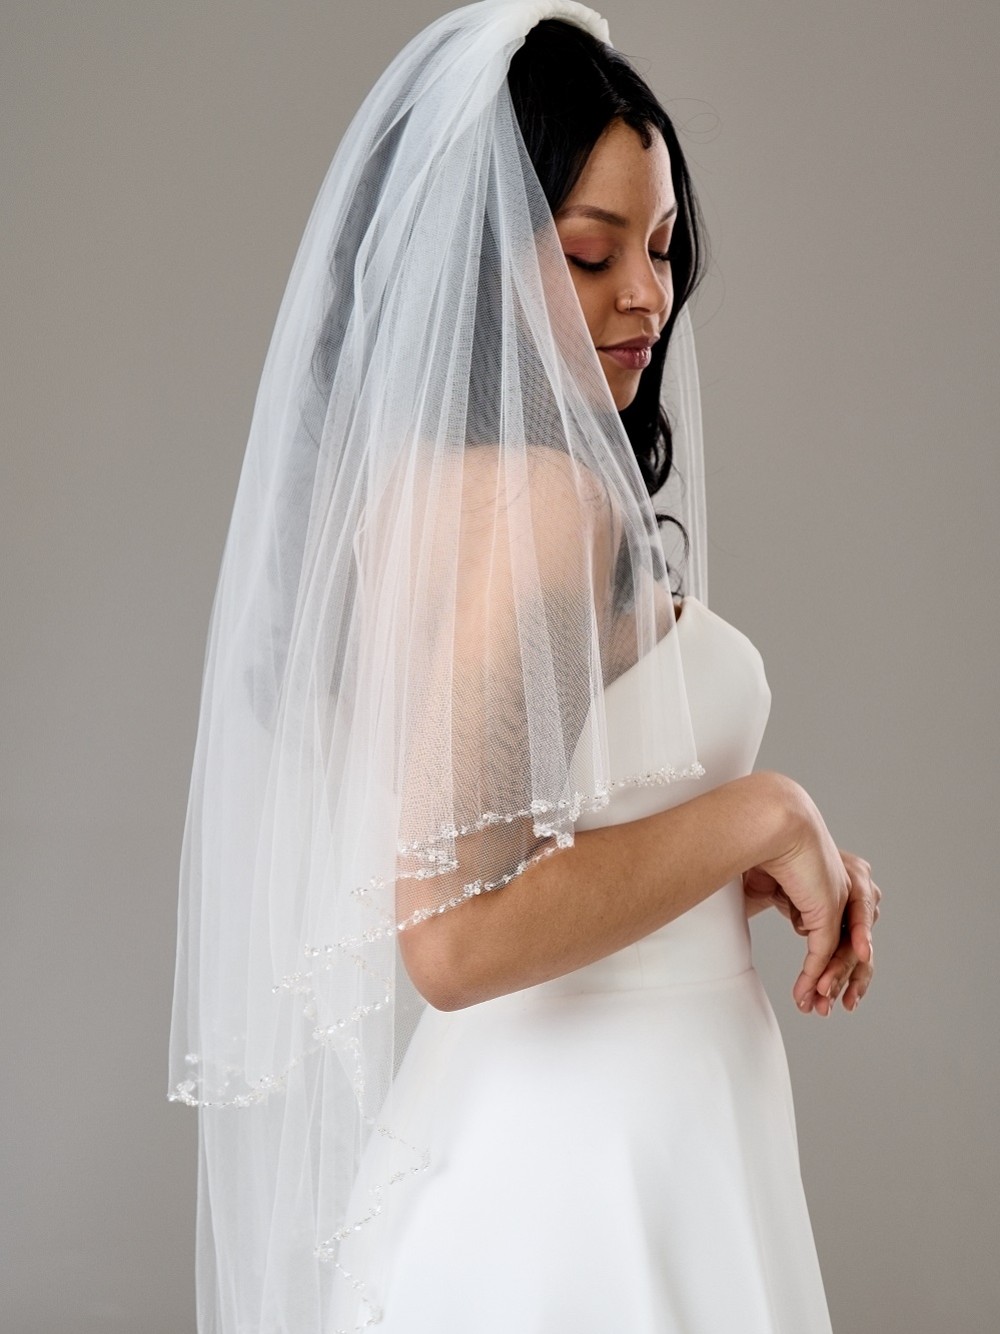 Photograph of Arlington Two Tier Bead and Sequin Edge Bridal Veil